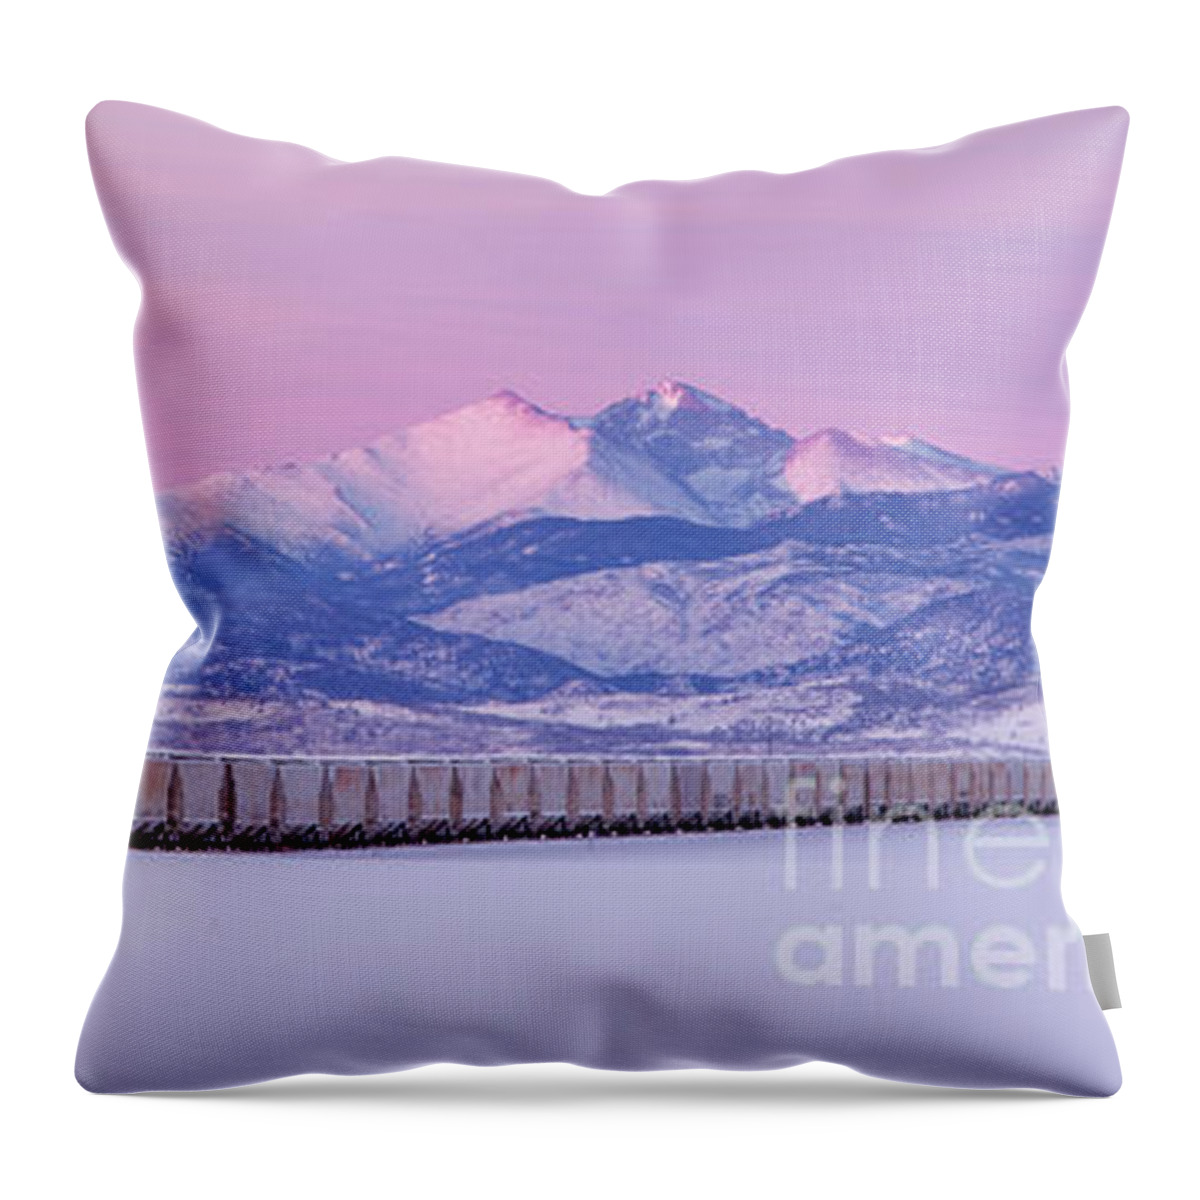 Longs Peak Throw Pillow featuring the photograph Fresh Colorado Snow by Ronda Kimbrow